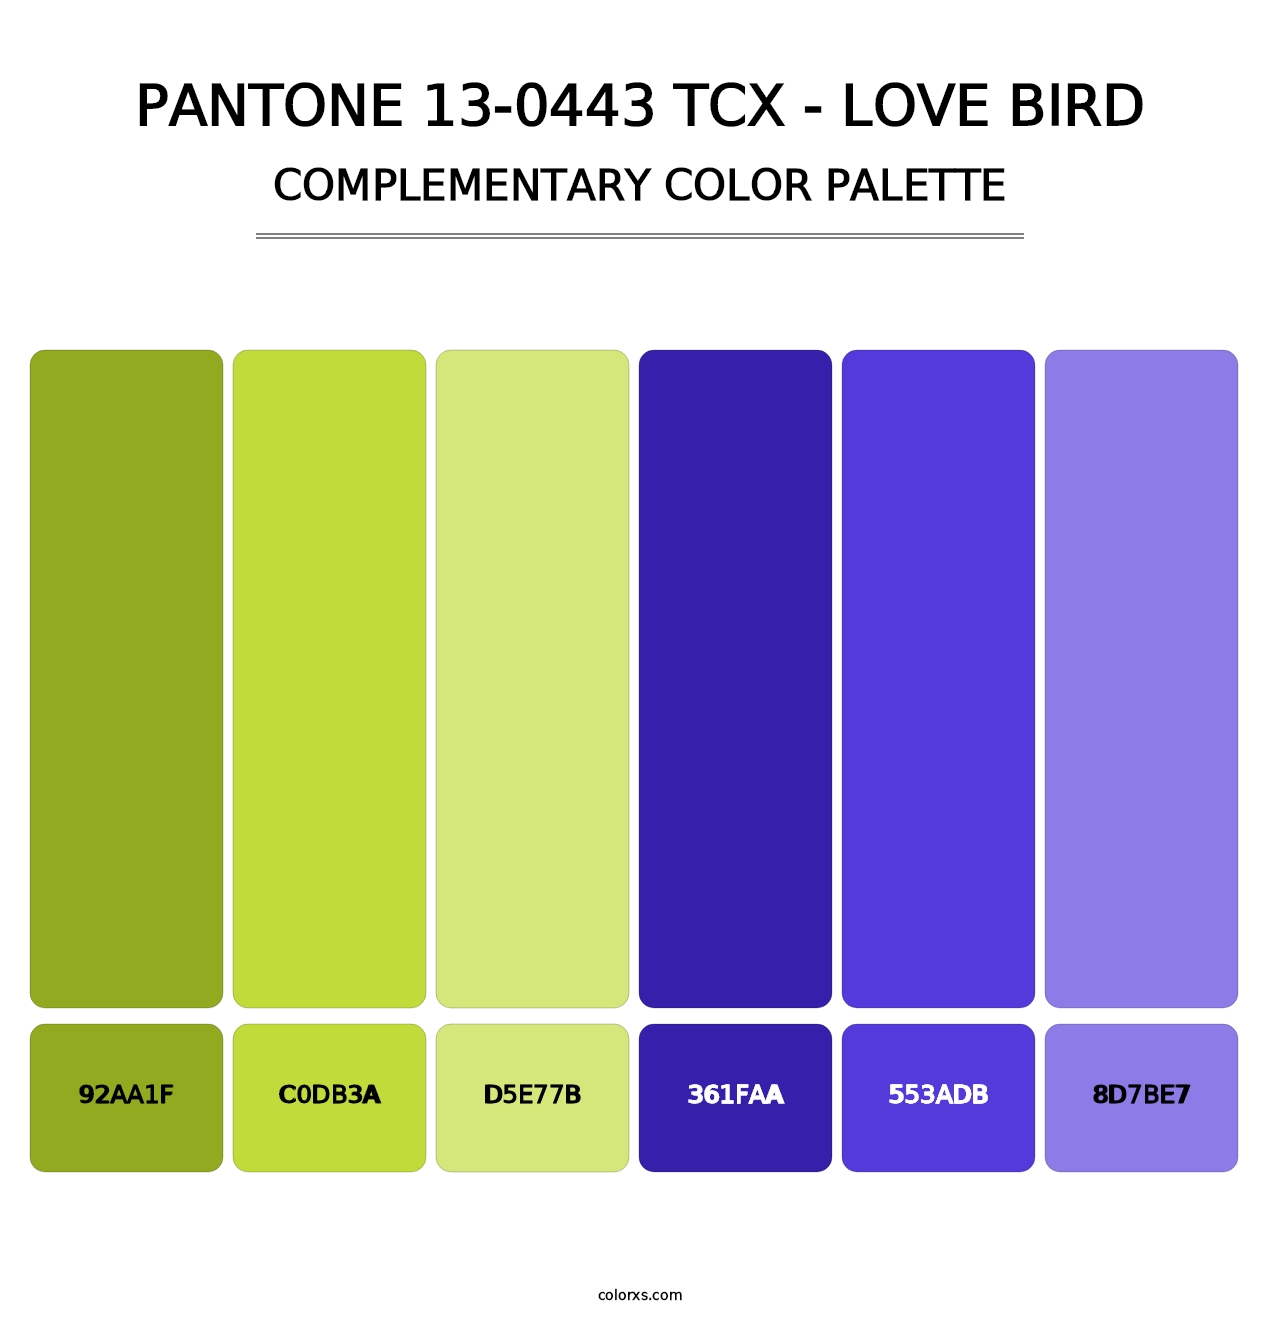 PANTONE 13-0443 TCX - Love Bird - Complementary Color Palette